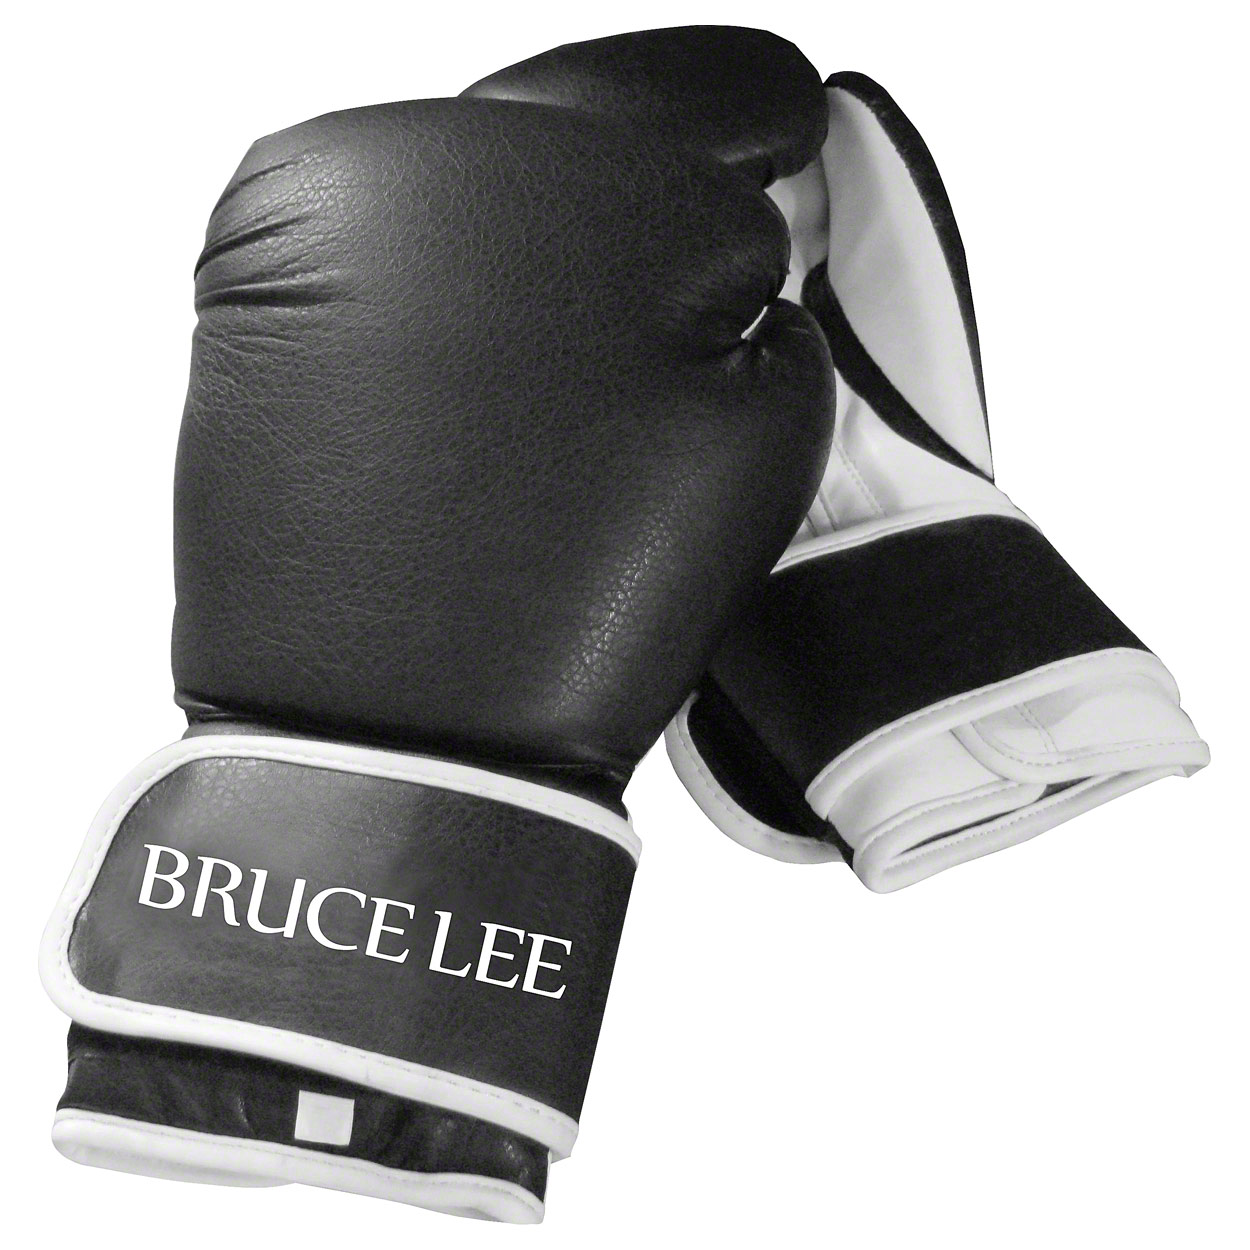 Bruce Lee Unisexs 14BLSBO028 Boxing Grappling Gloves Large Black